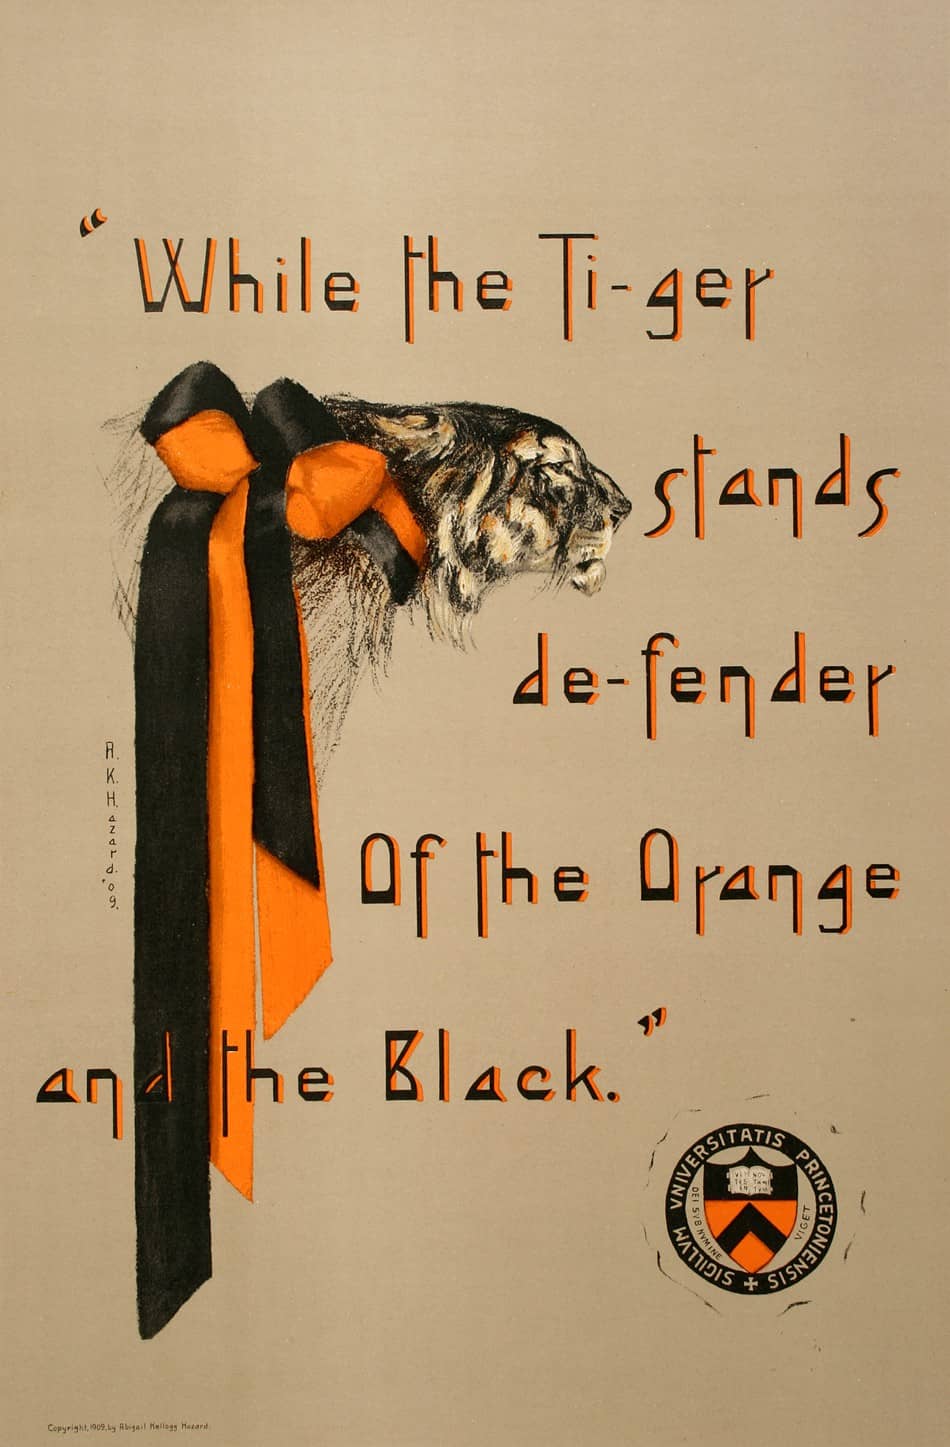 Original Vintage Princeton University Tiger Poster 1909 by Abigail Kellogg Hazard